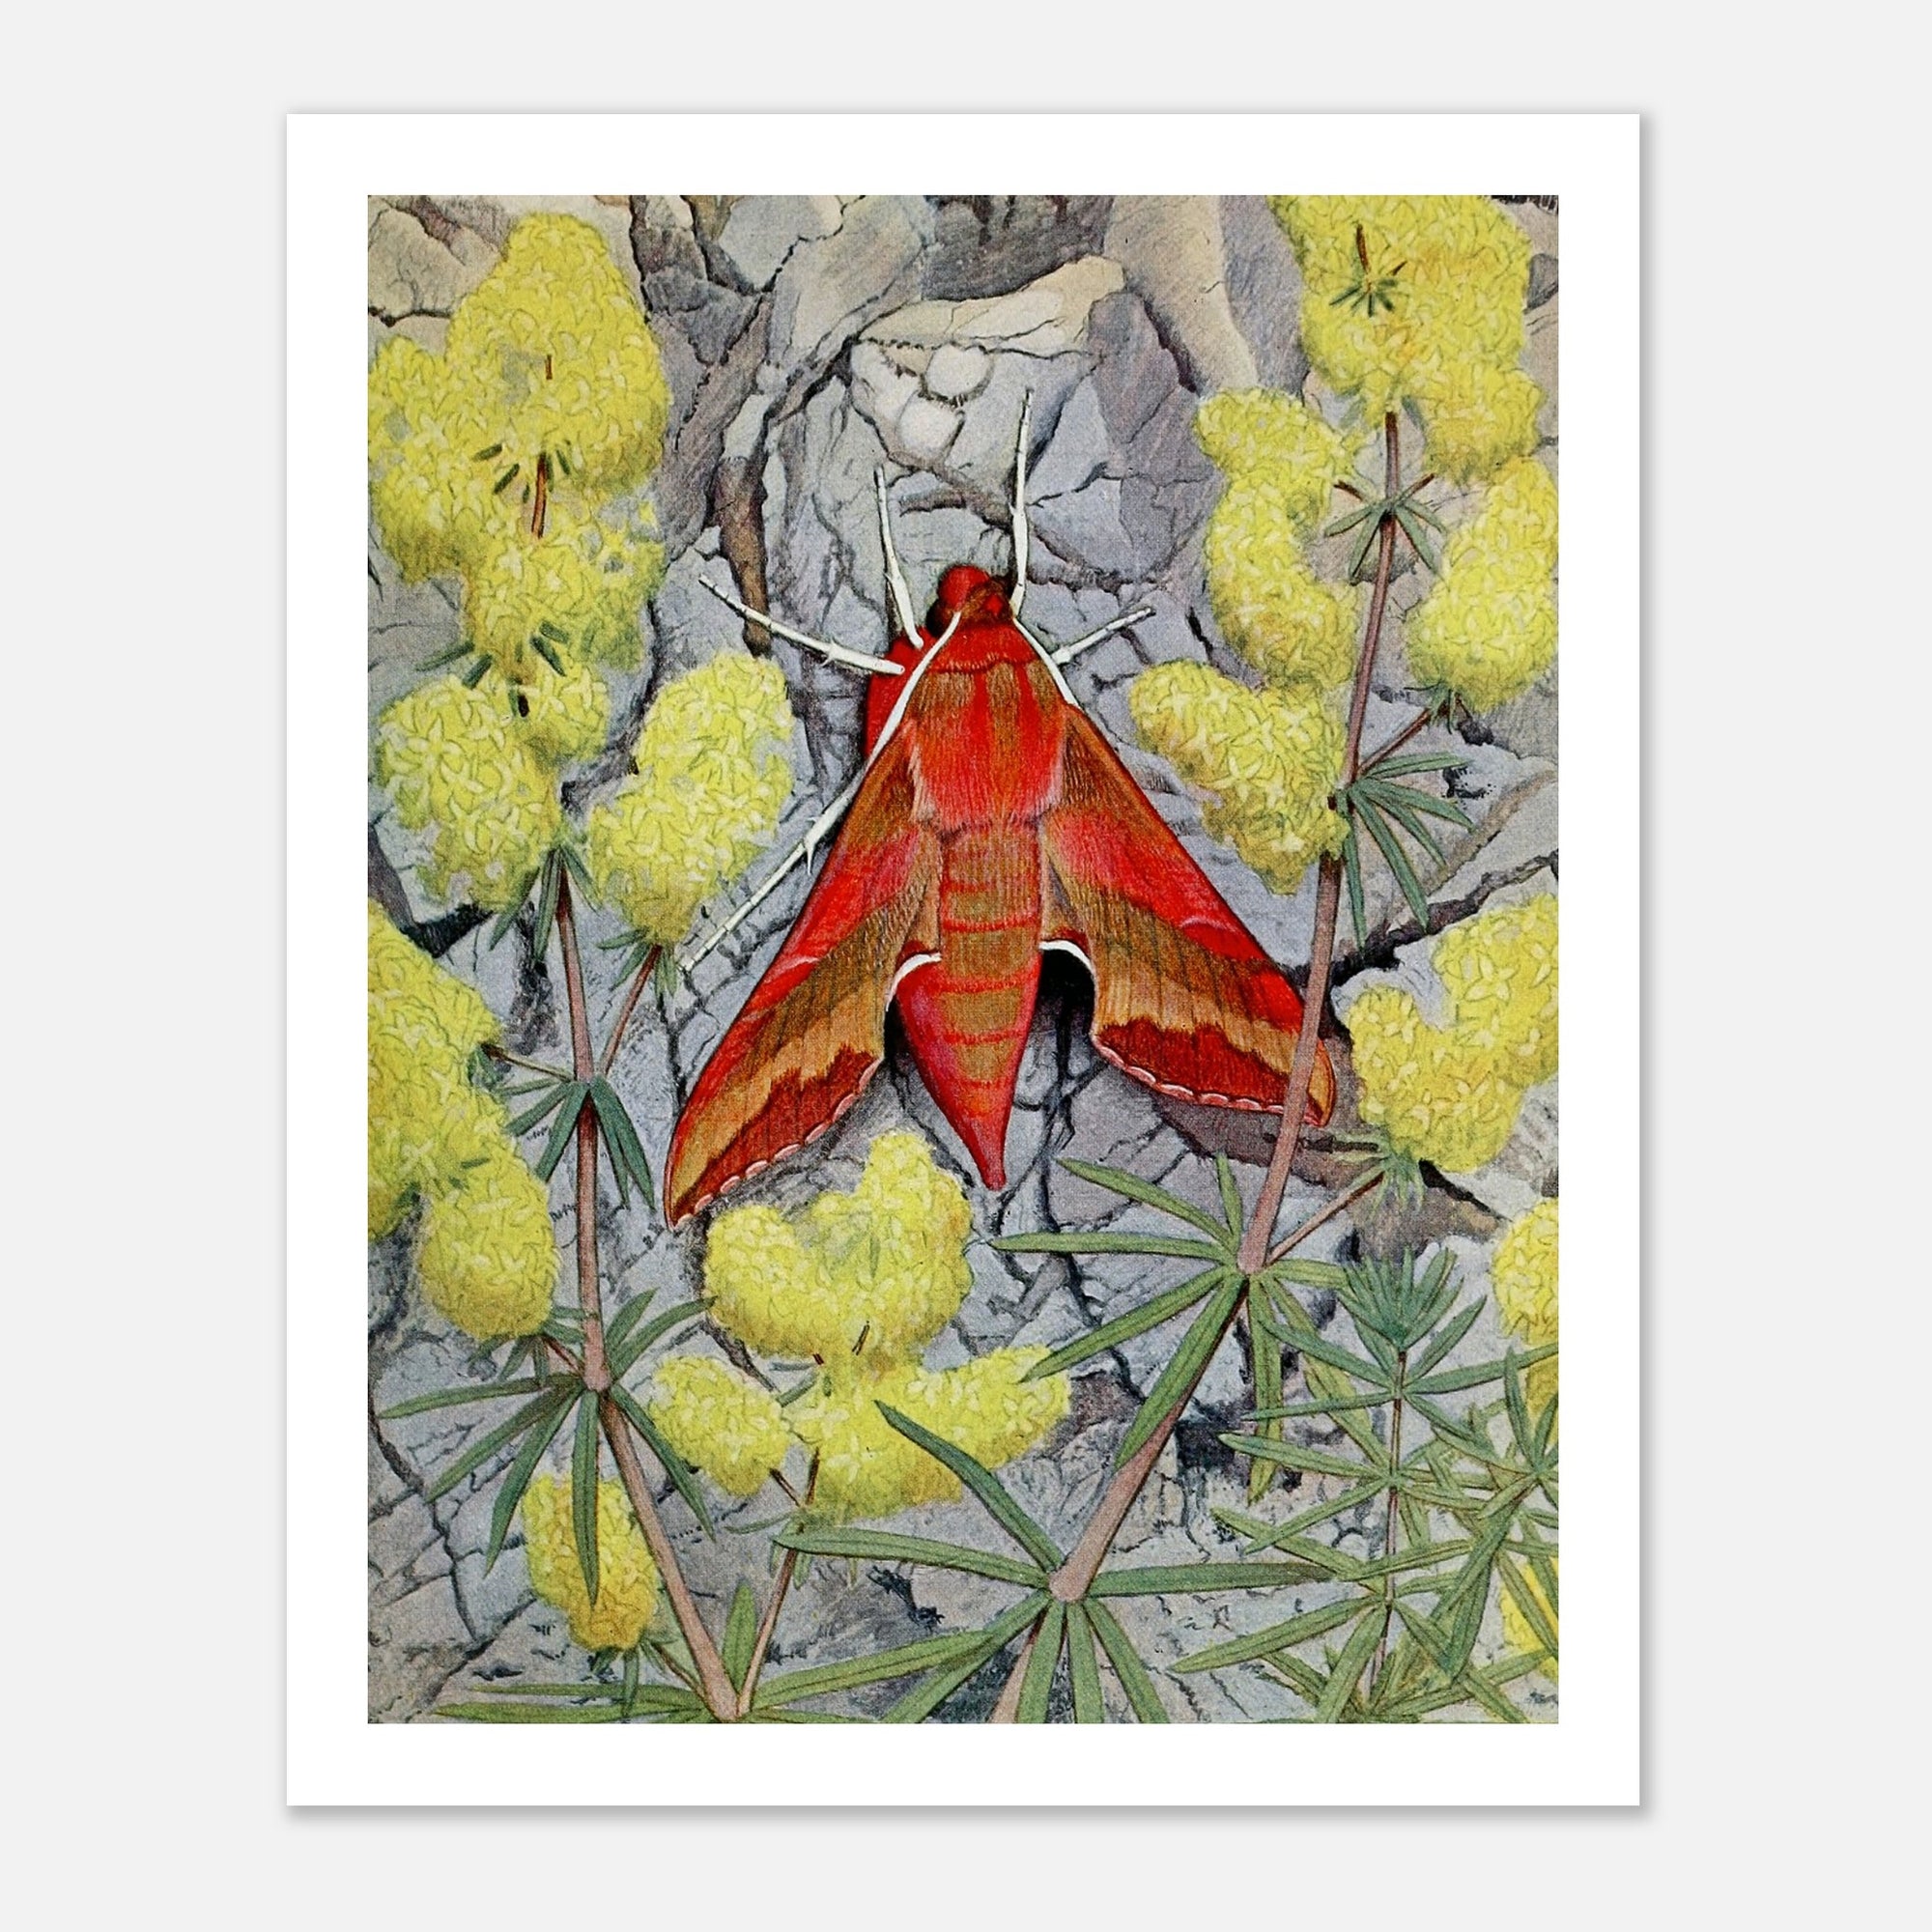 red moth illustration on plants and rocks art poster